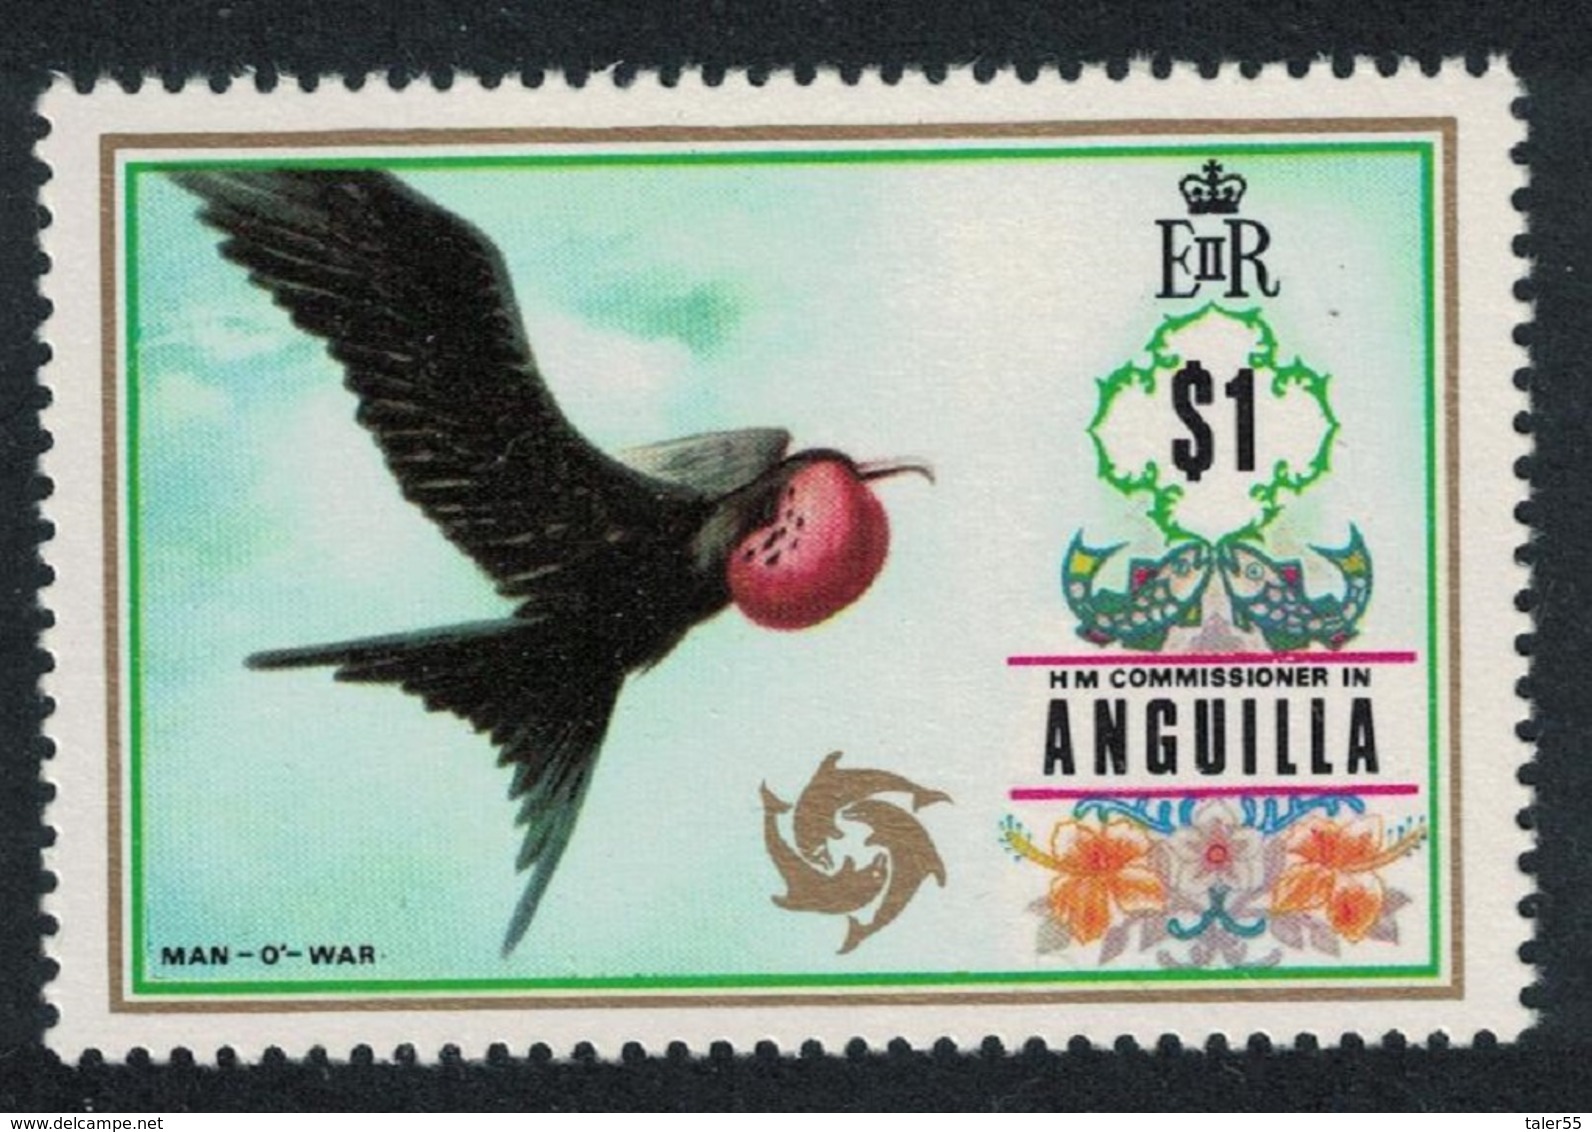 Anguilla Magnificent Frigate Bird 'Man-of-War' 1v $1 MNH SG#142 - Anguilla (1968-...)